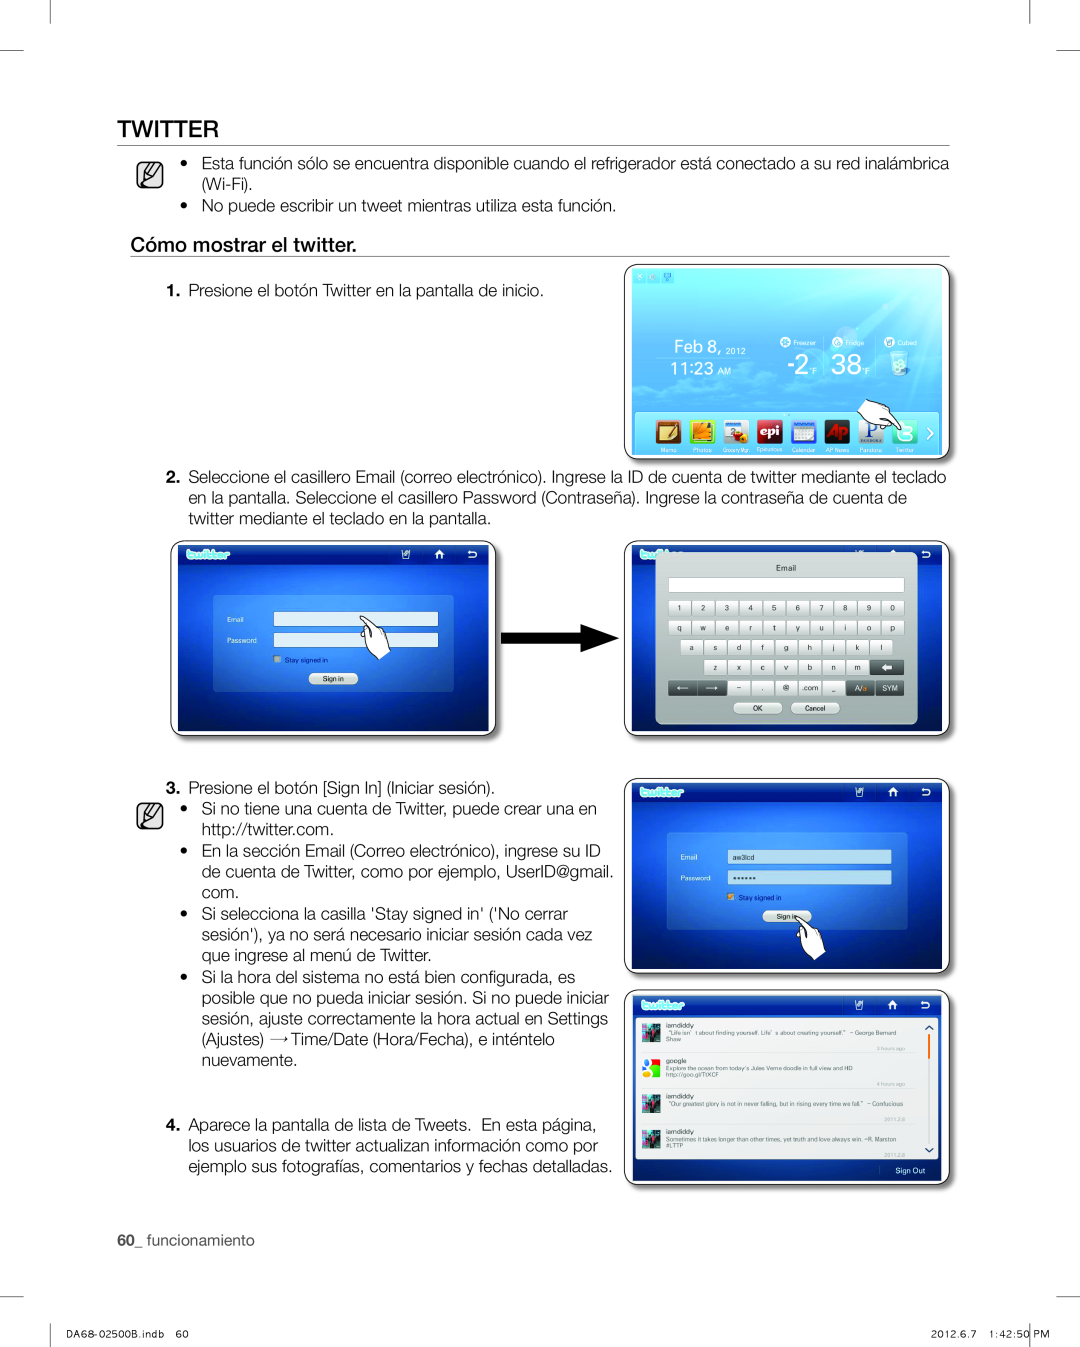 Samsung RSG309AARS user manual Cómo mostrar el twitter, Twitter, funcionamiento 